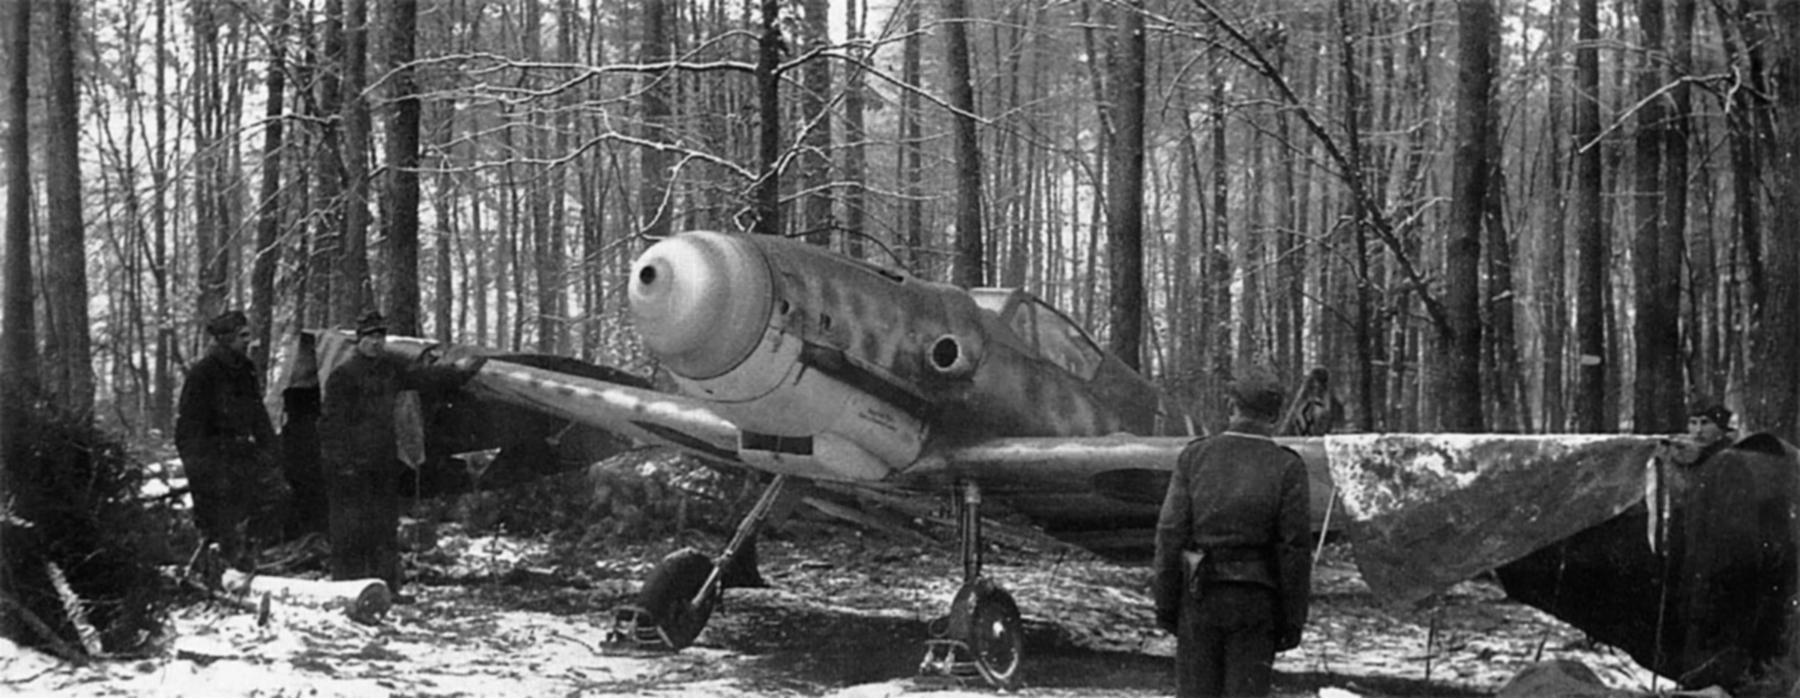 Messerschmitt Bf 109G14 Erla 12.JG53 Blue 4 WNr 462789 Germany 13th Jan 1945 01